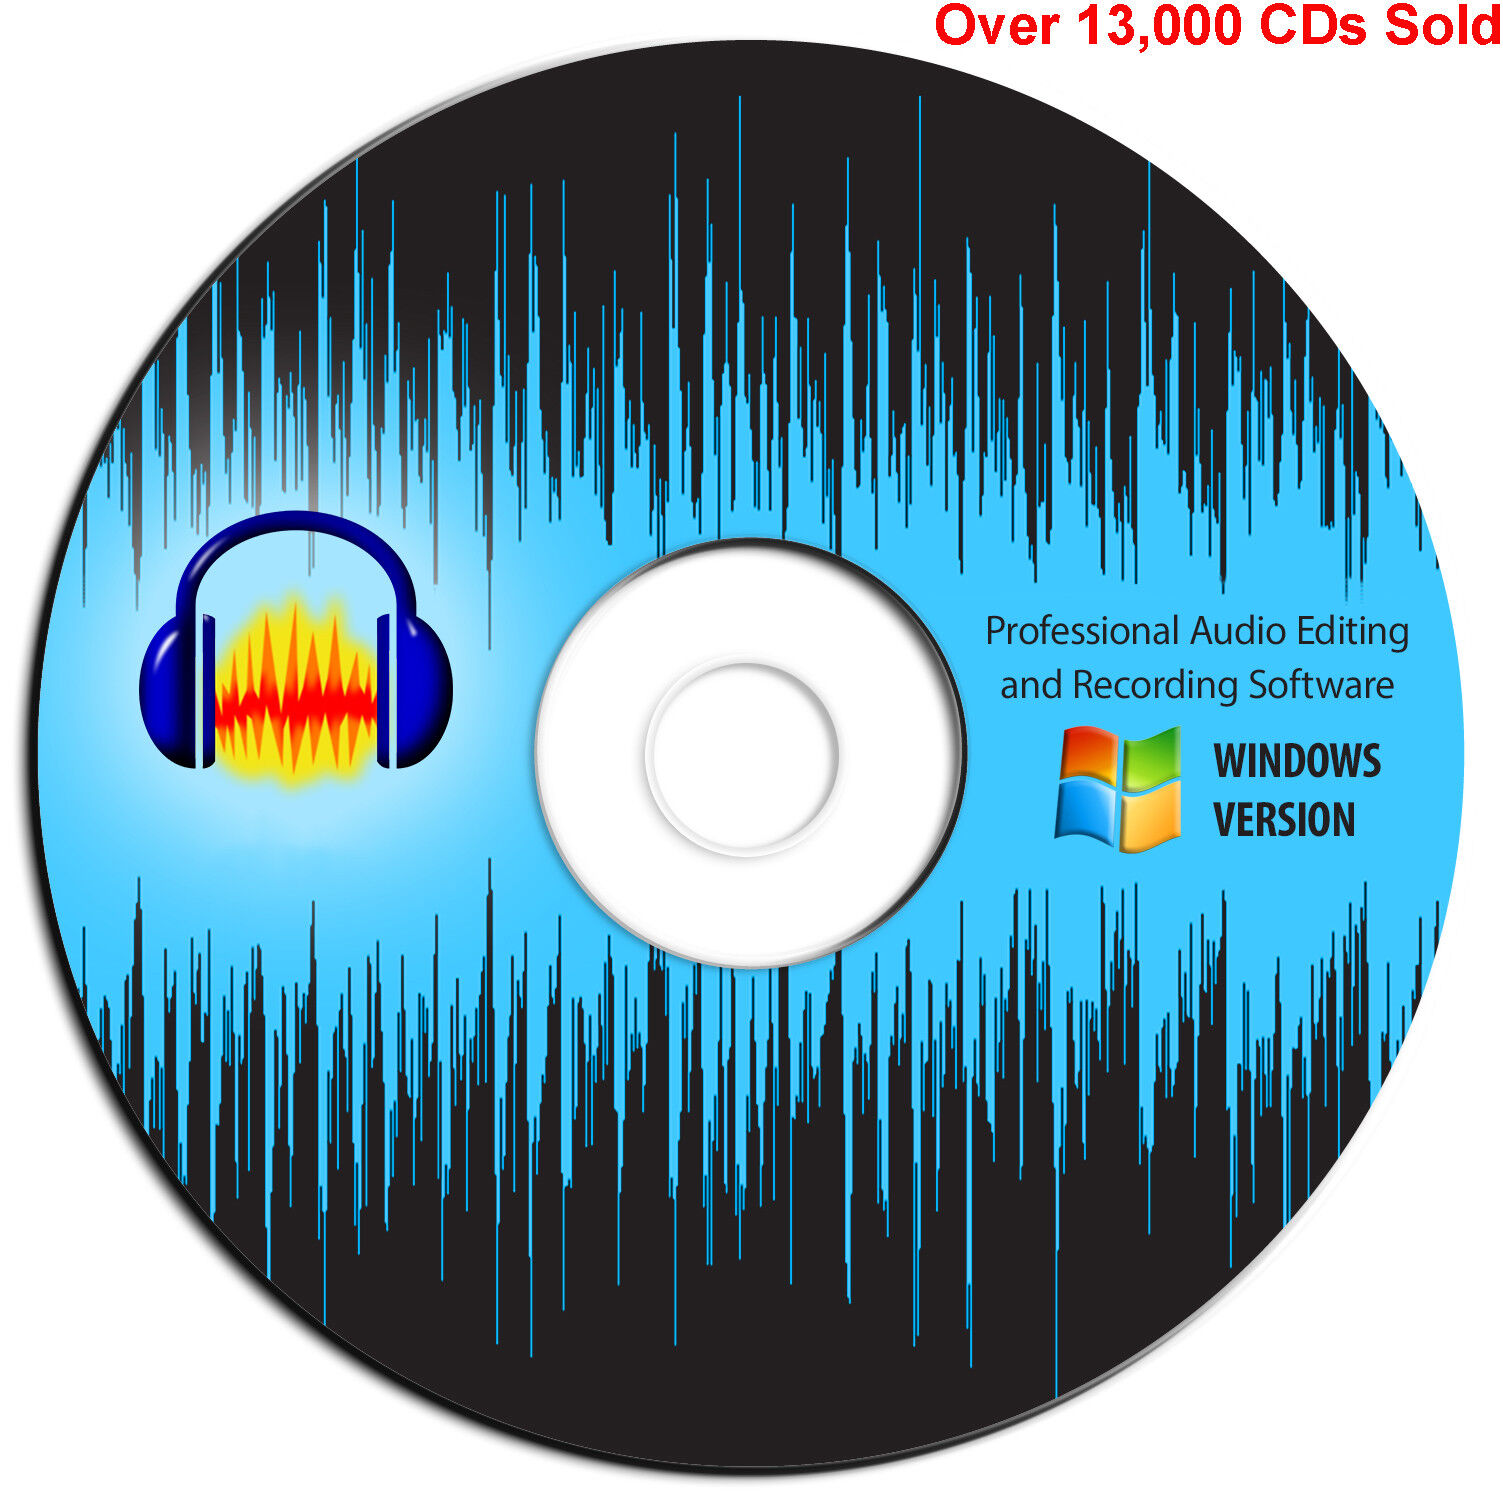 Audacity Professional Audio Music Studio Editing-Recording Software-Windows-CD